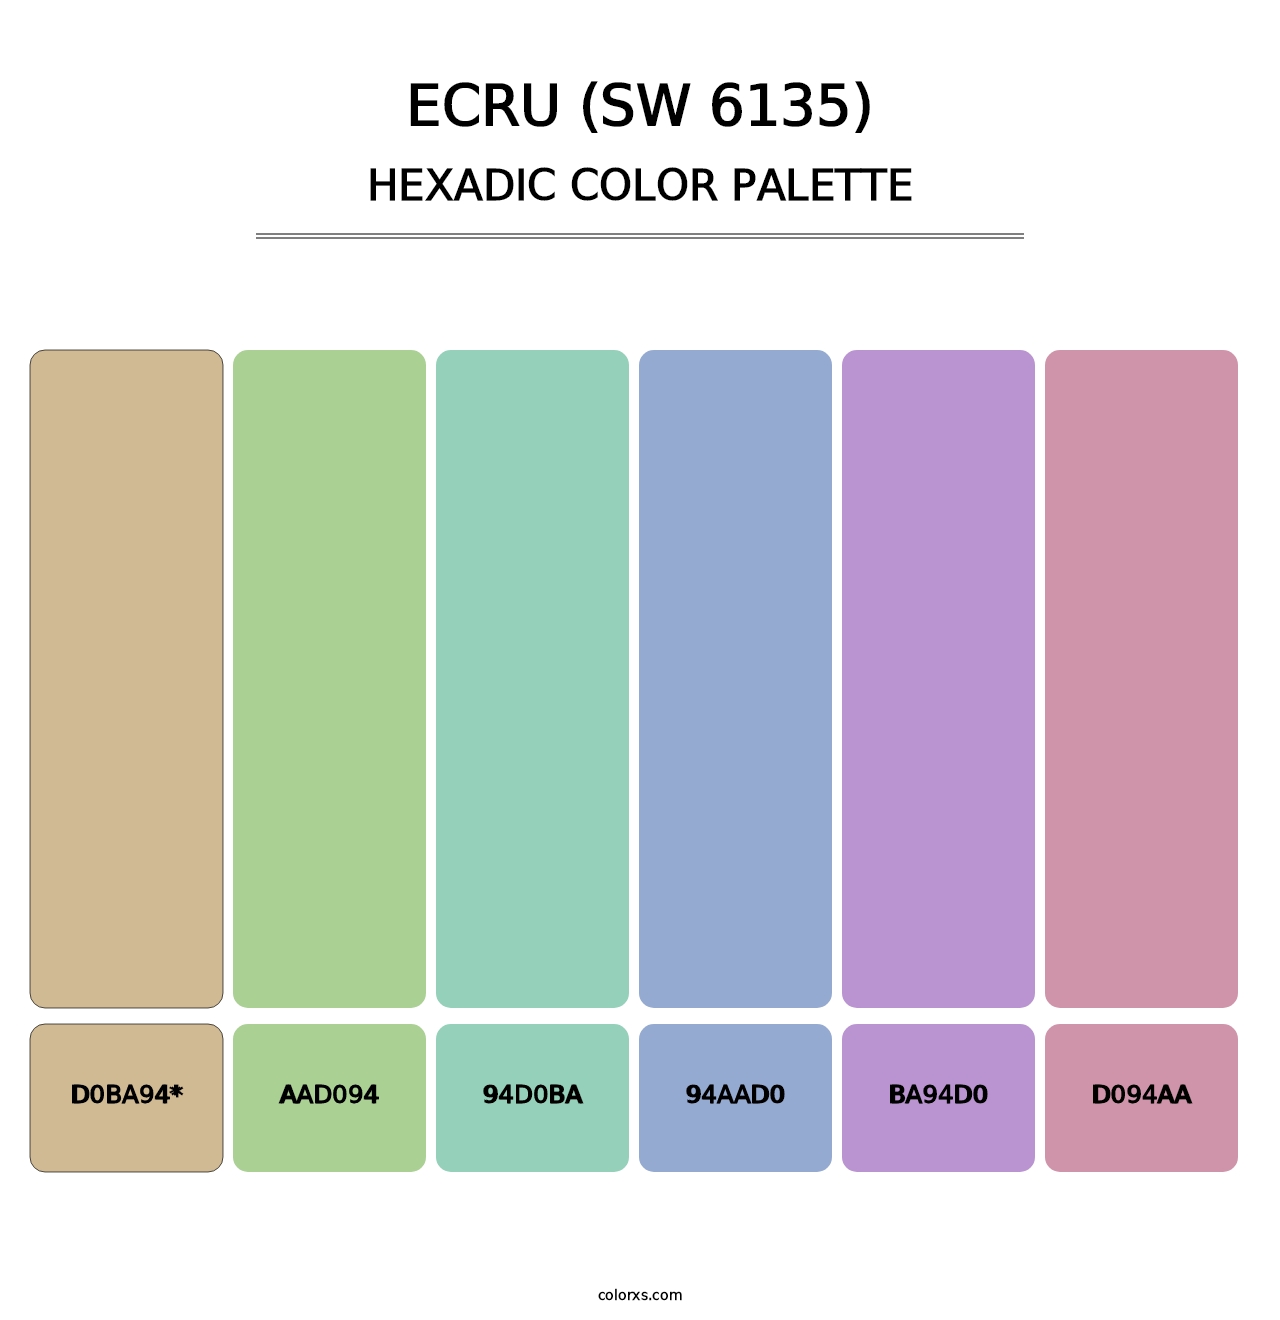 Ecru (SW 6135) - Hexadic Color Palette